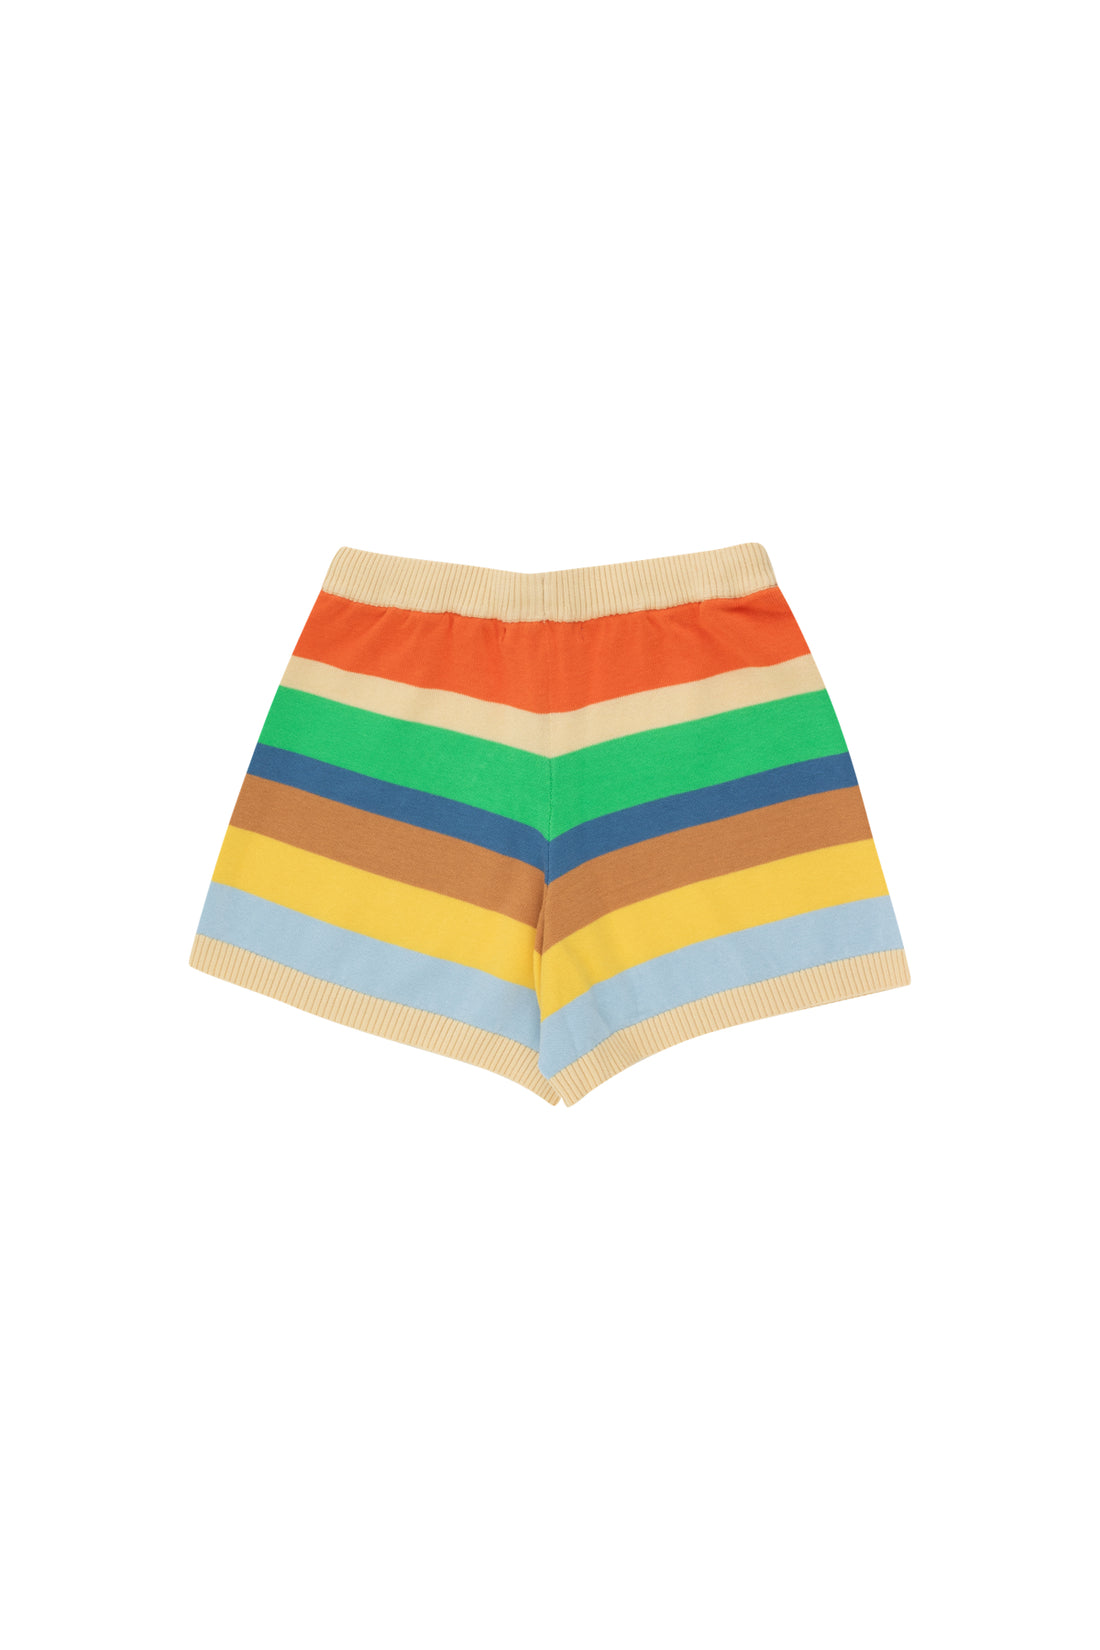 Retro Stripes Shorts | Multi